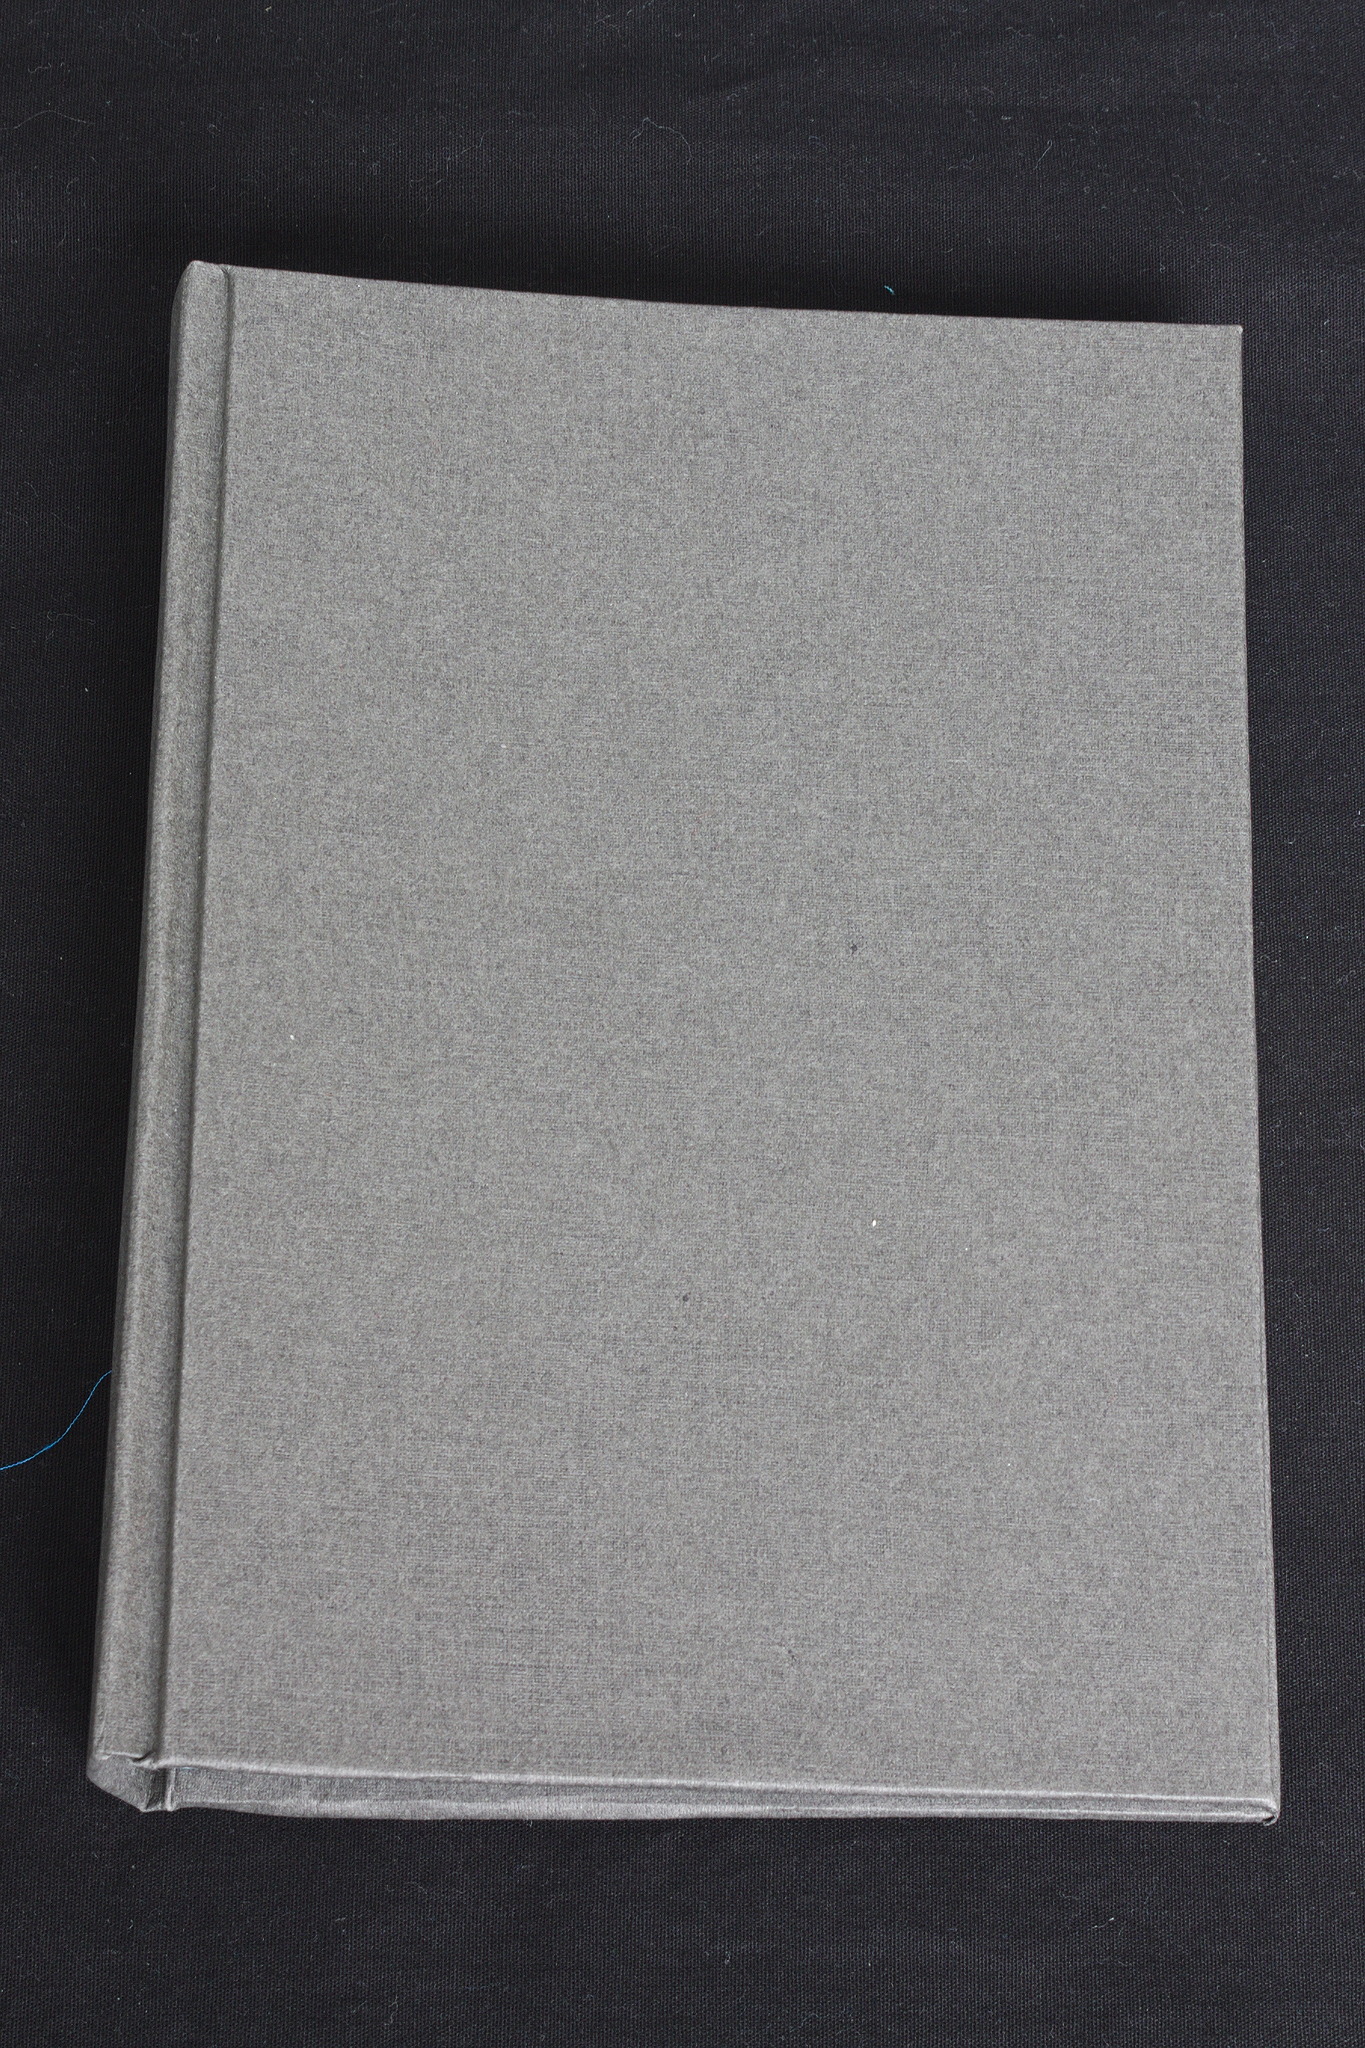 A closed hardcover book in uniform dark grey.